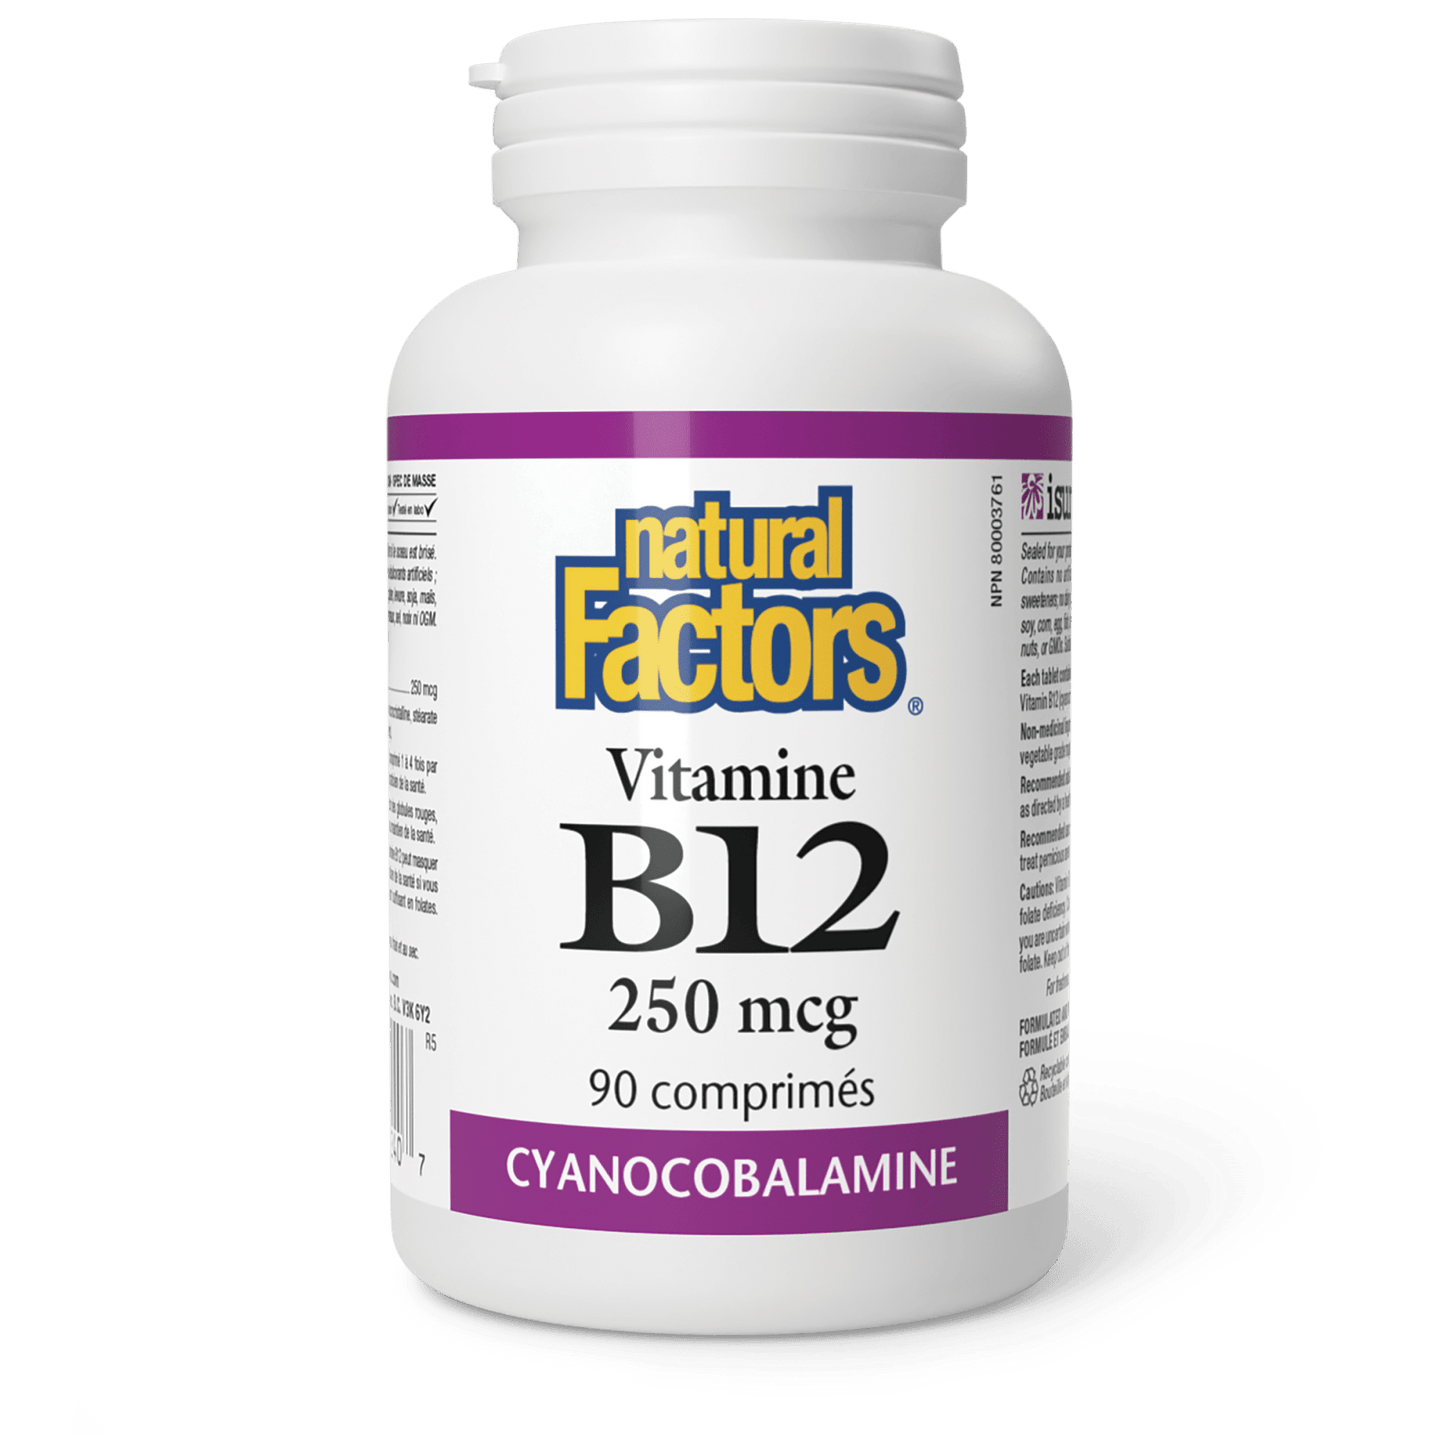 Vitamine B12 250 mcg, Natural Factors|v|image|1240